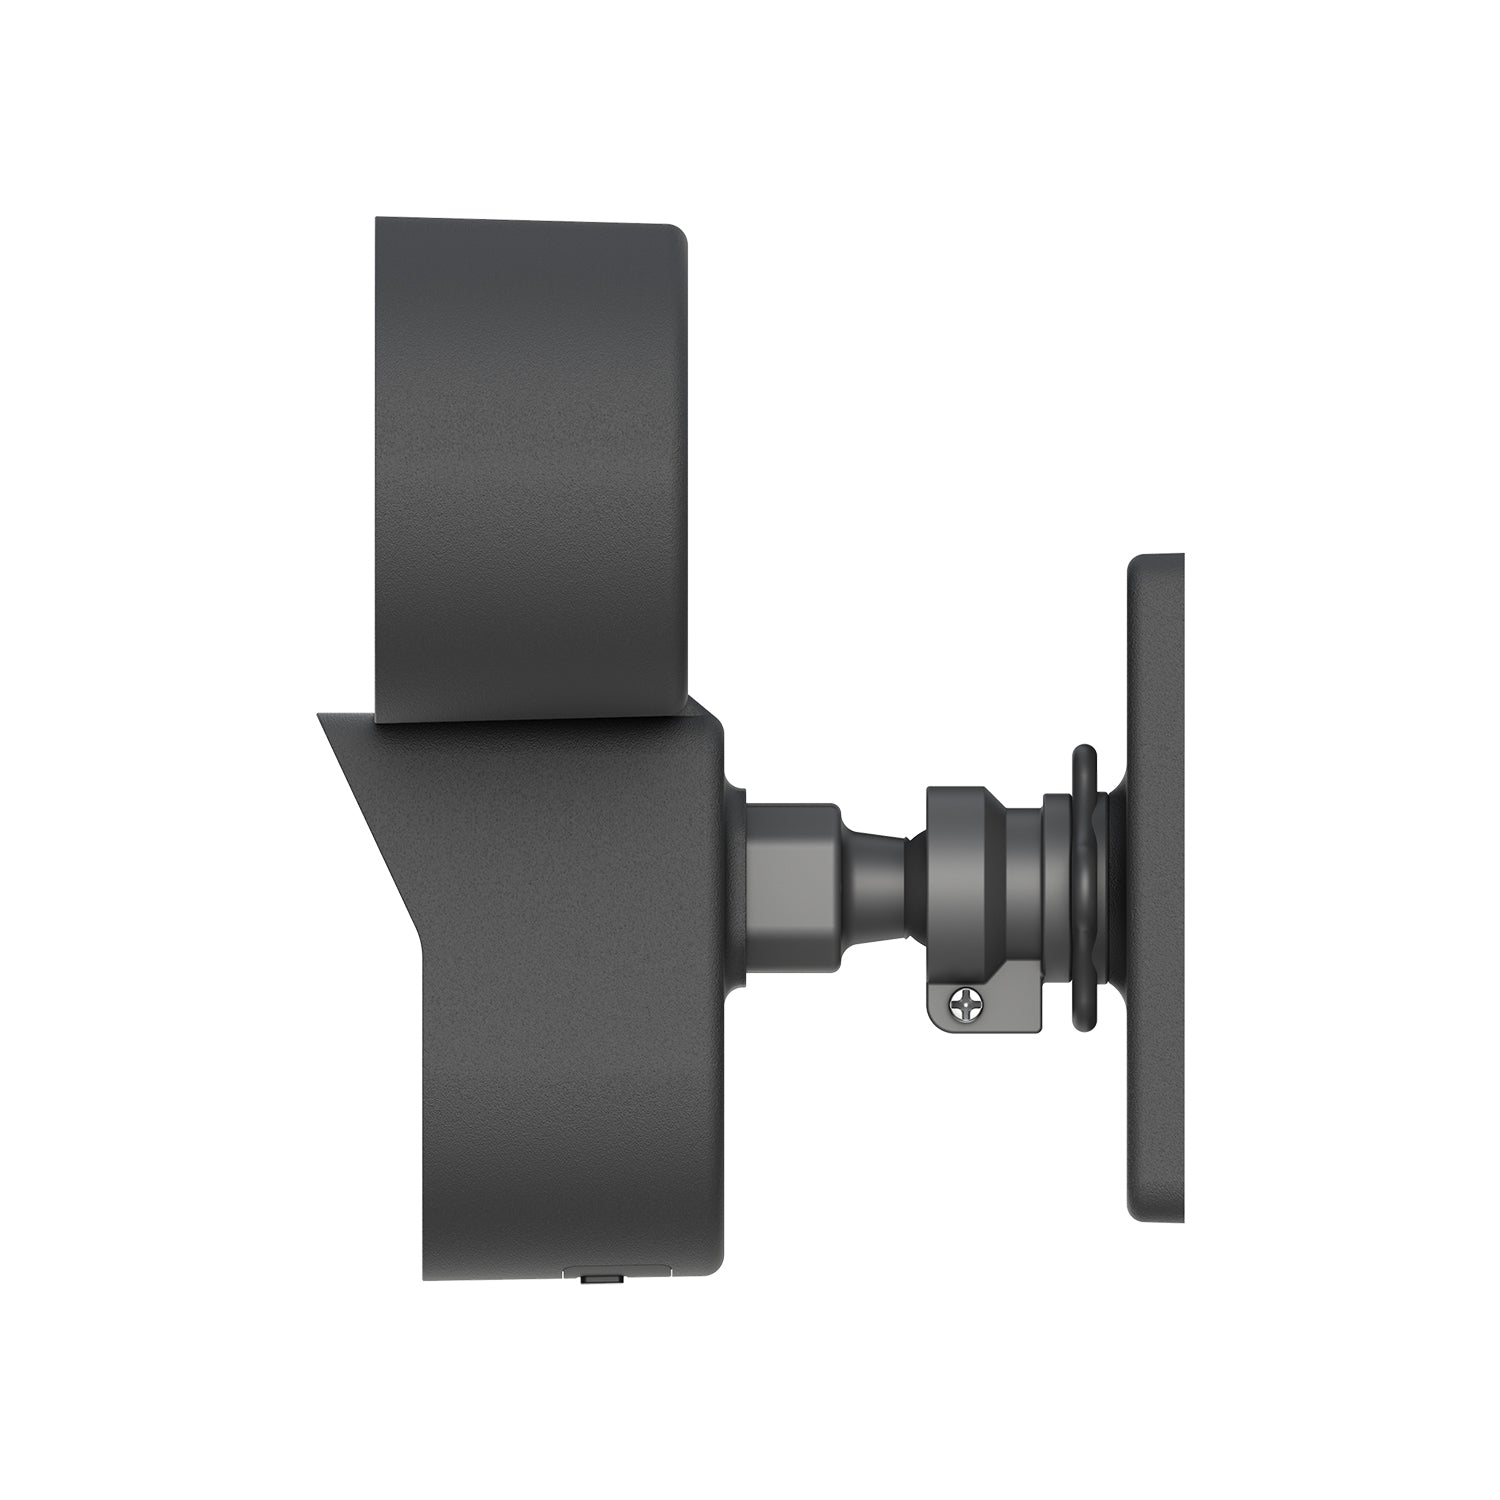 Xodo E9 Wi-Fi Wireless Smart Floodlight Security Camera with Motion Sensor Alarm